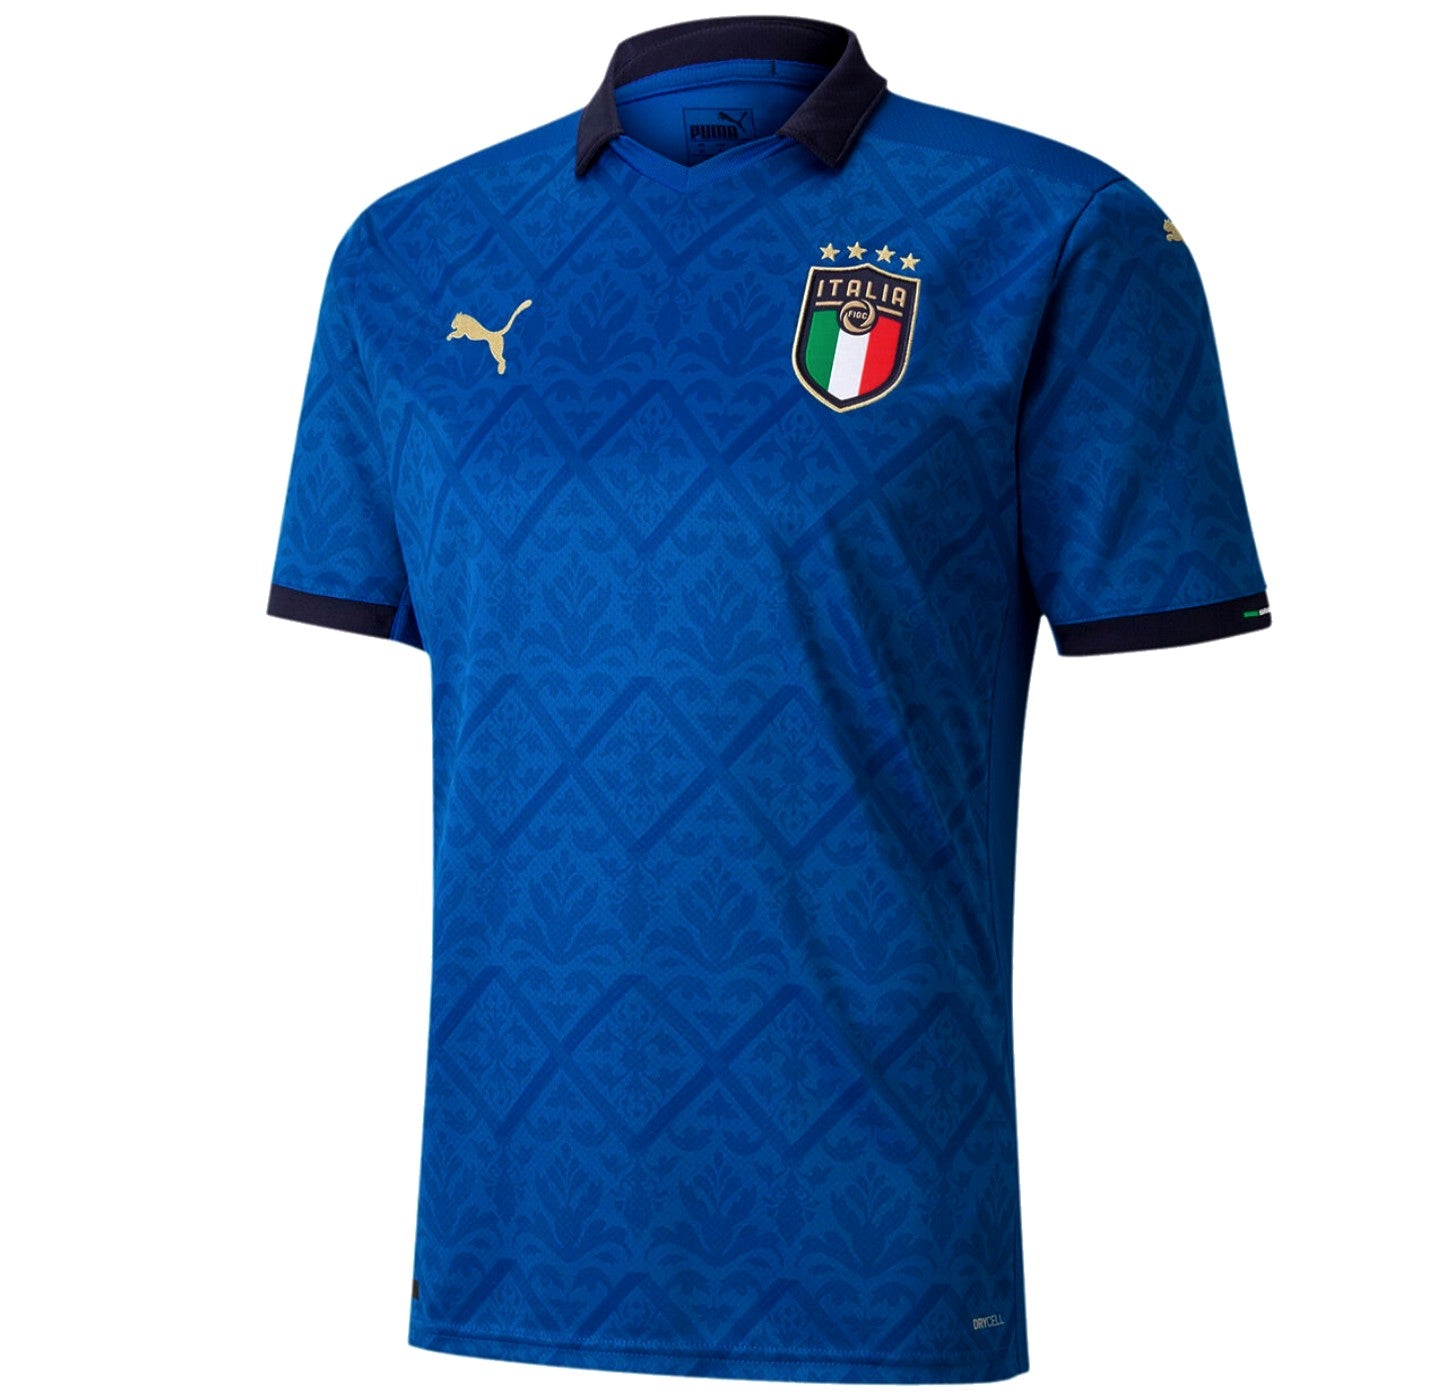 Italy National Soccer Team Fan Jerseys for sale